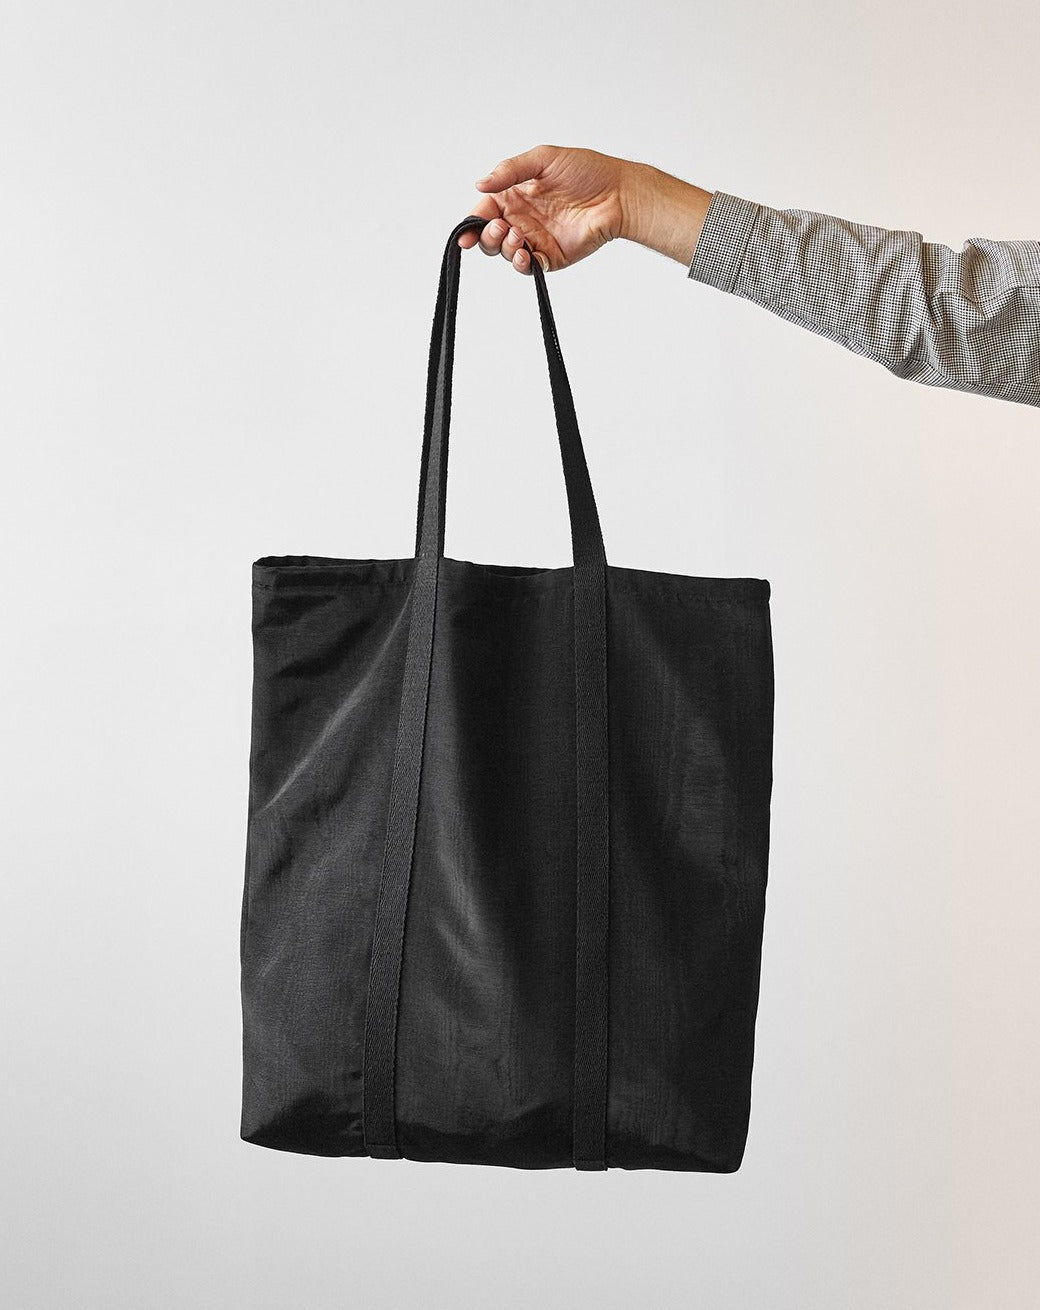 tote bag oversize black unisex genderless taro veri montreal clothing